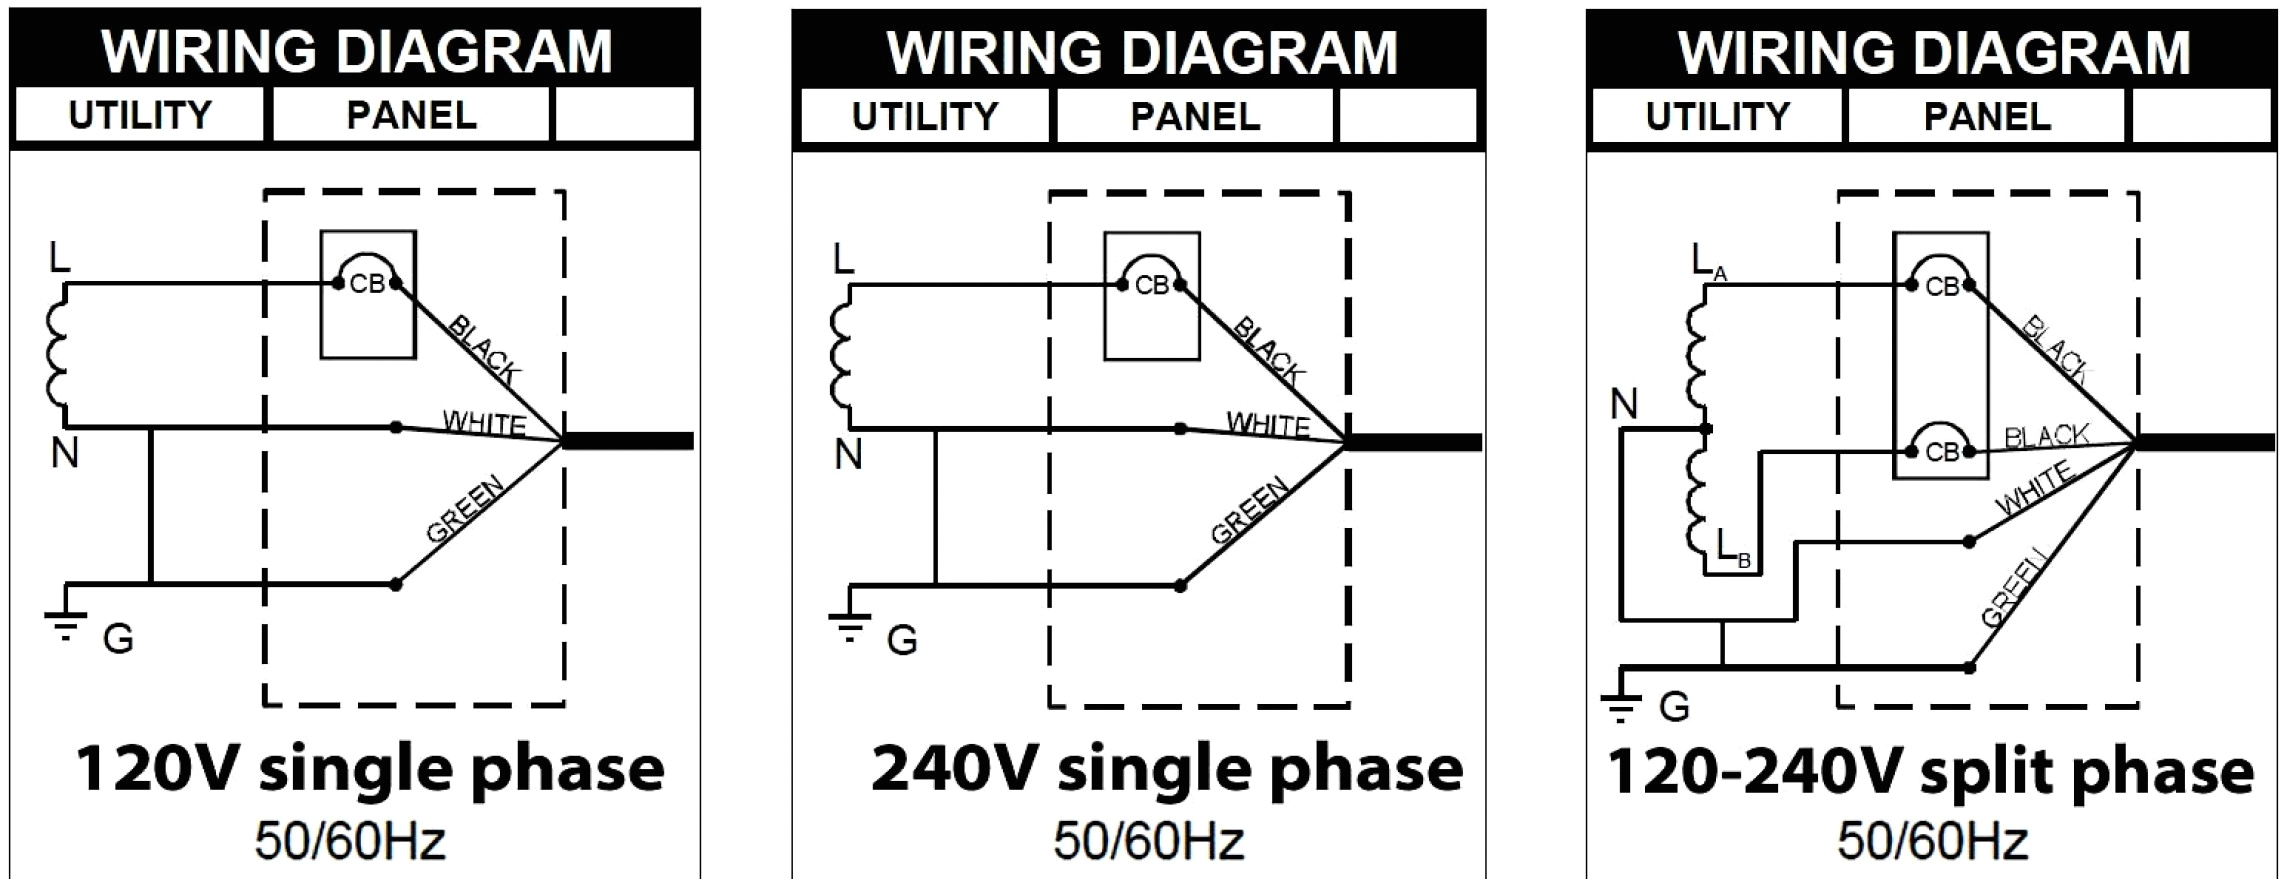 Single Phase 220v Wiring Diagram 3 Wire Single Phase Diagram Wiring Diagram Blog